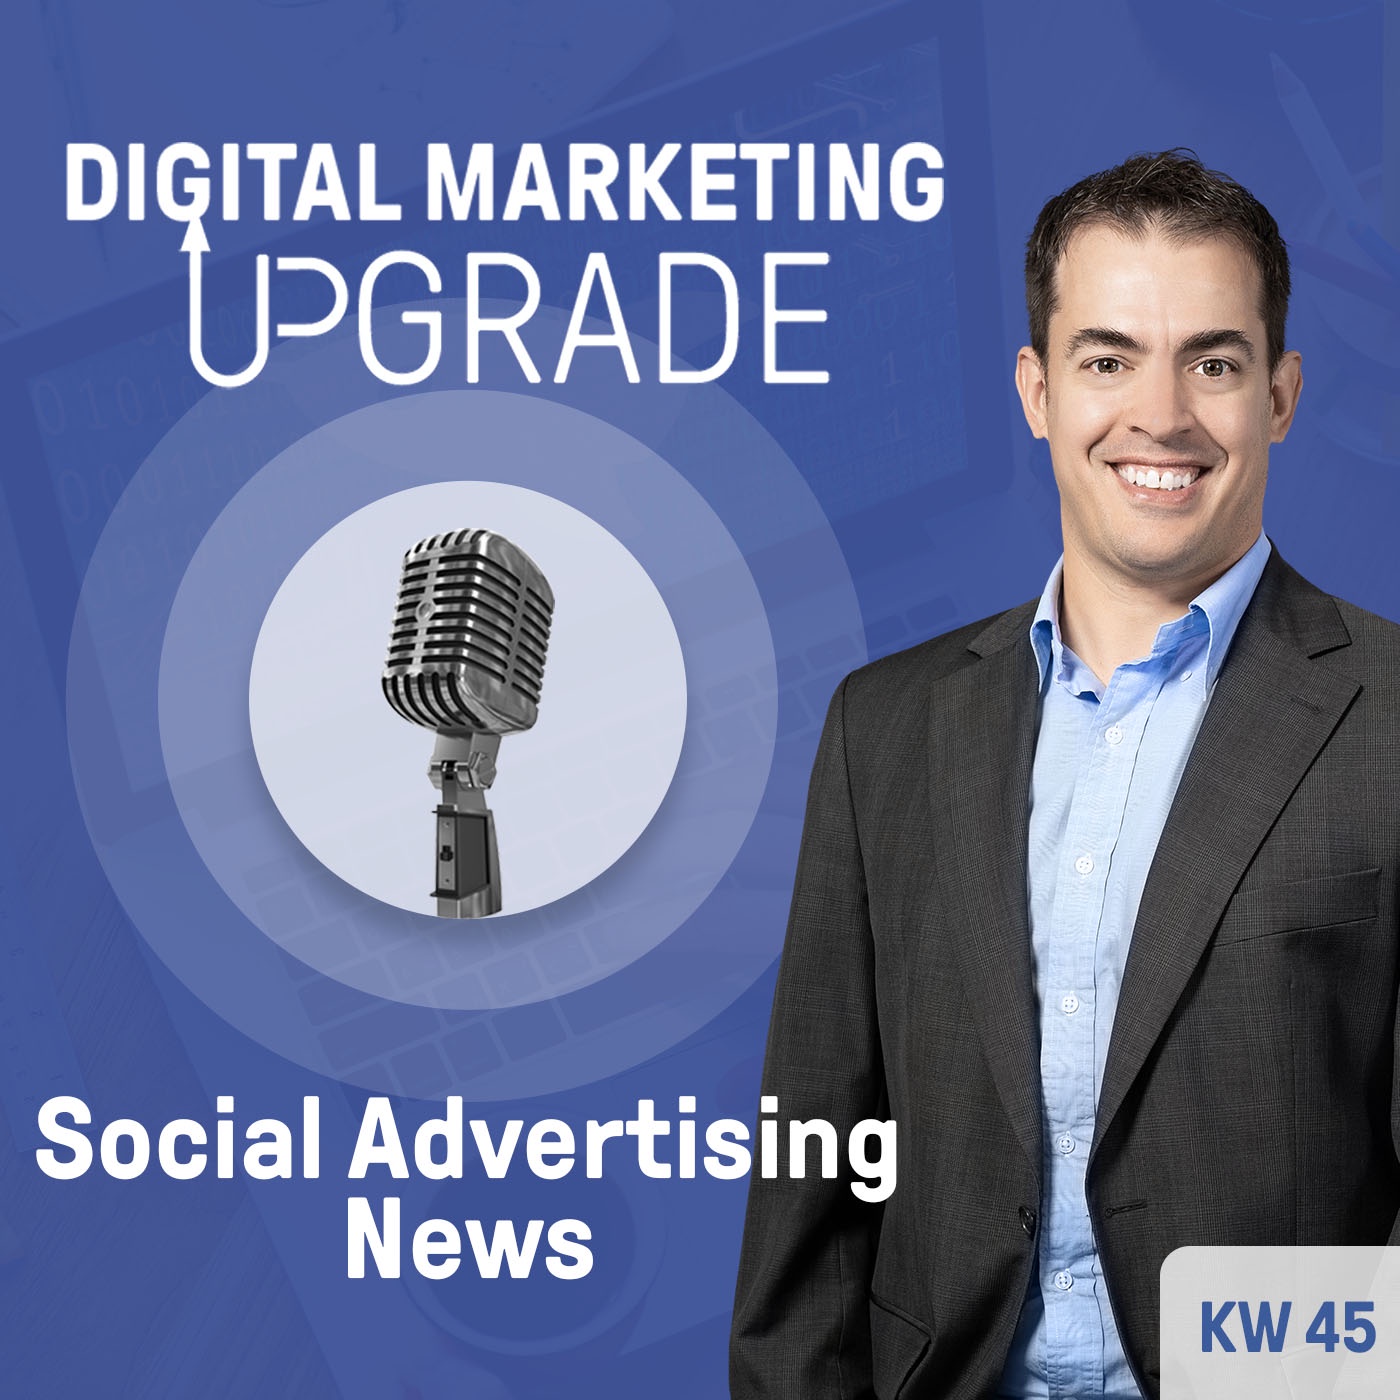 Social Advertising News - KW 45/23